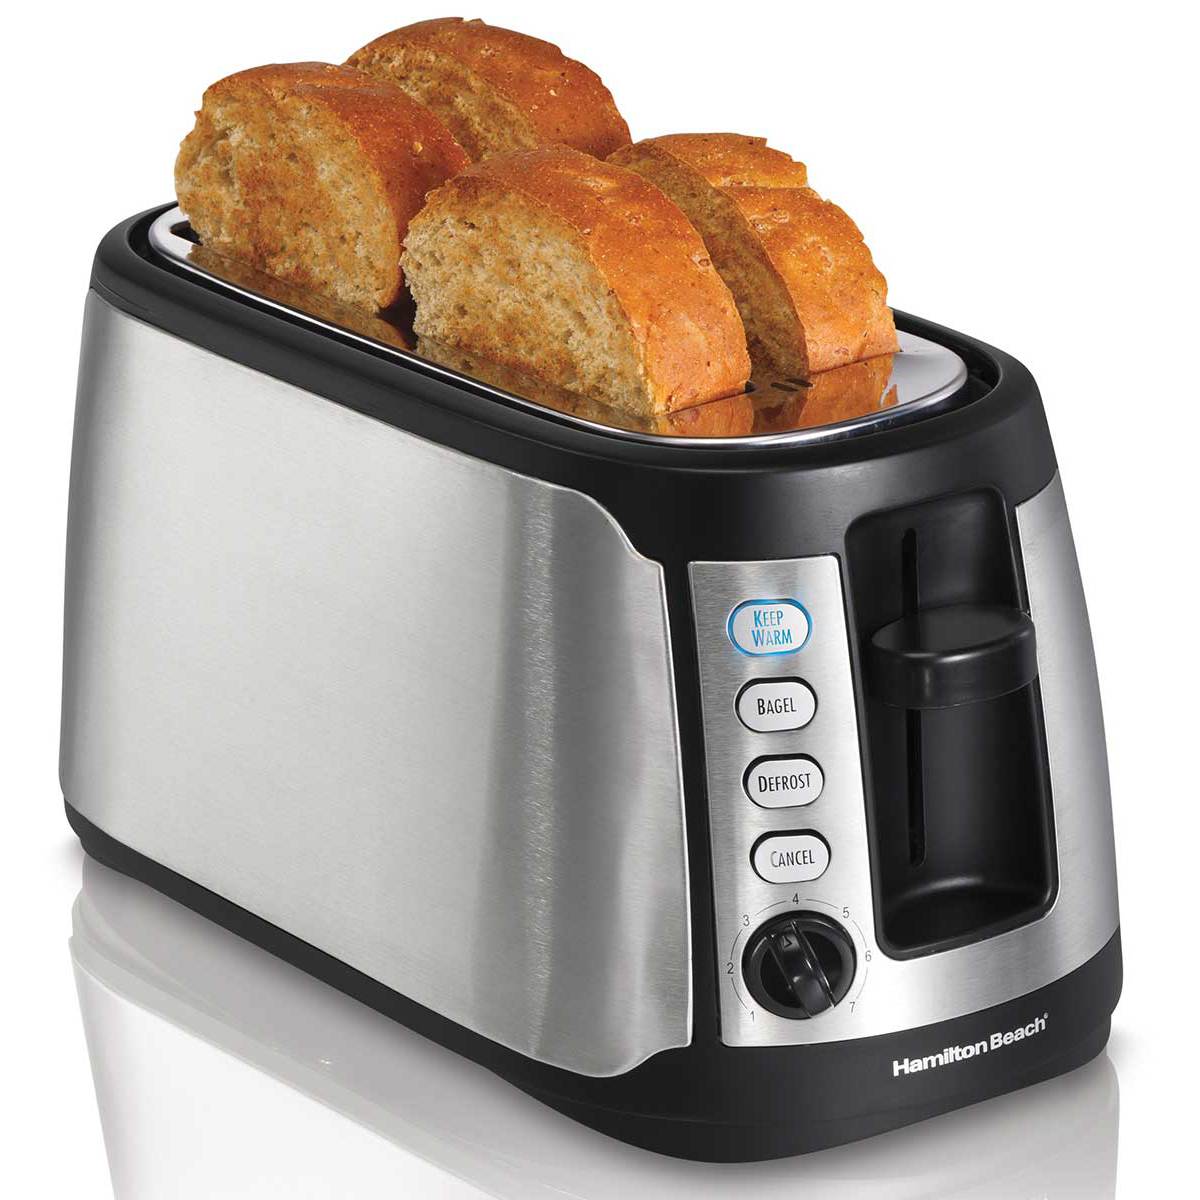 Keep Warm 4 Slice Long Slot Toaster (24810)